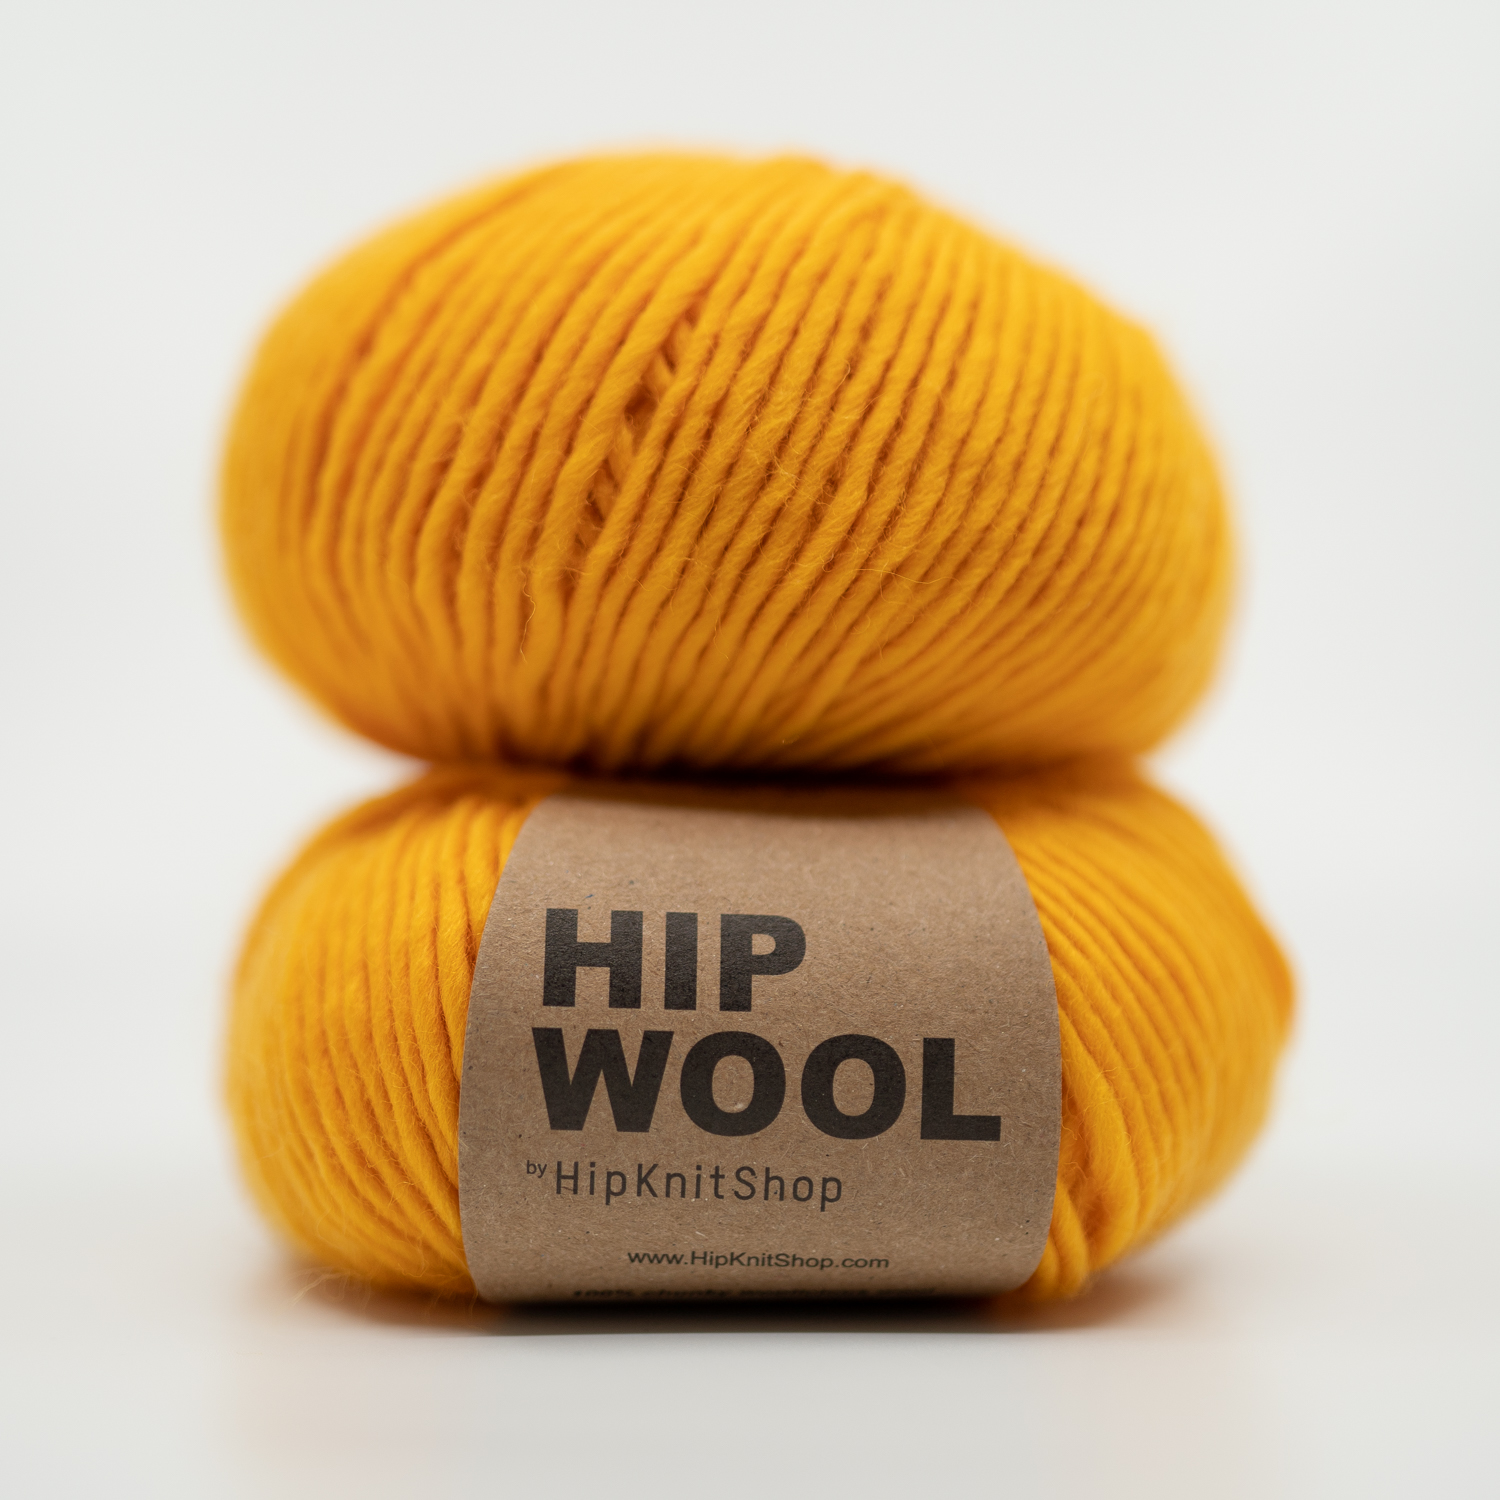  - Moody mandarin | Hip wool | Colorful yarn by HipKnitShop - 06/10/2022